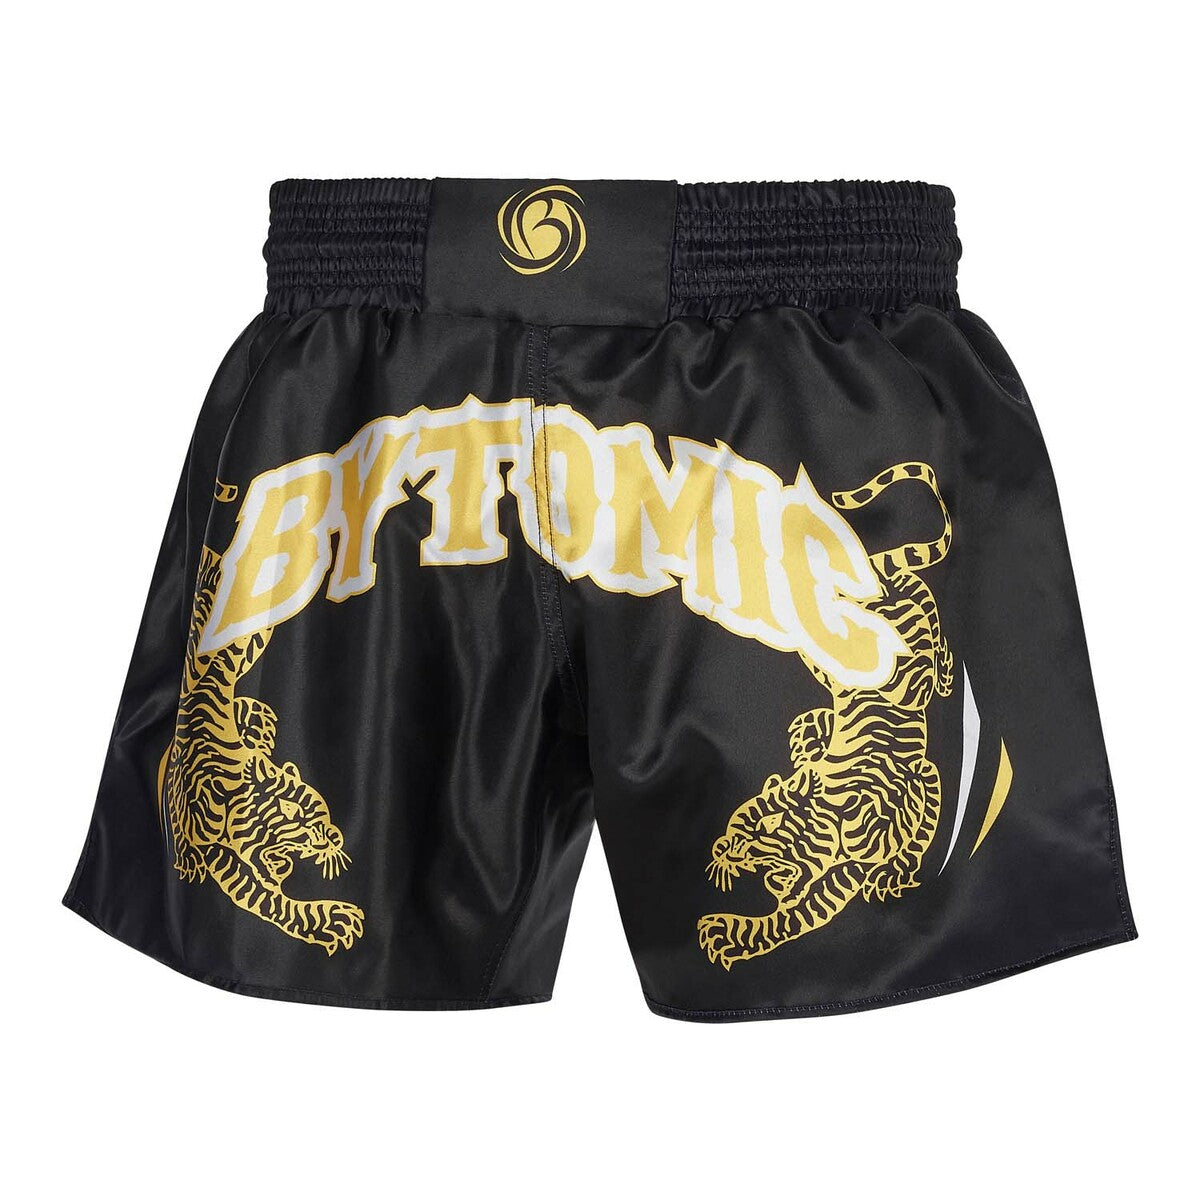 Bytomic Twin Tiger Muay Thai Shorts Black/White/Gold